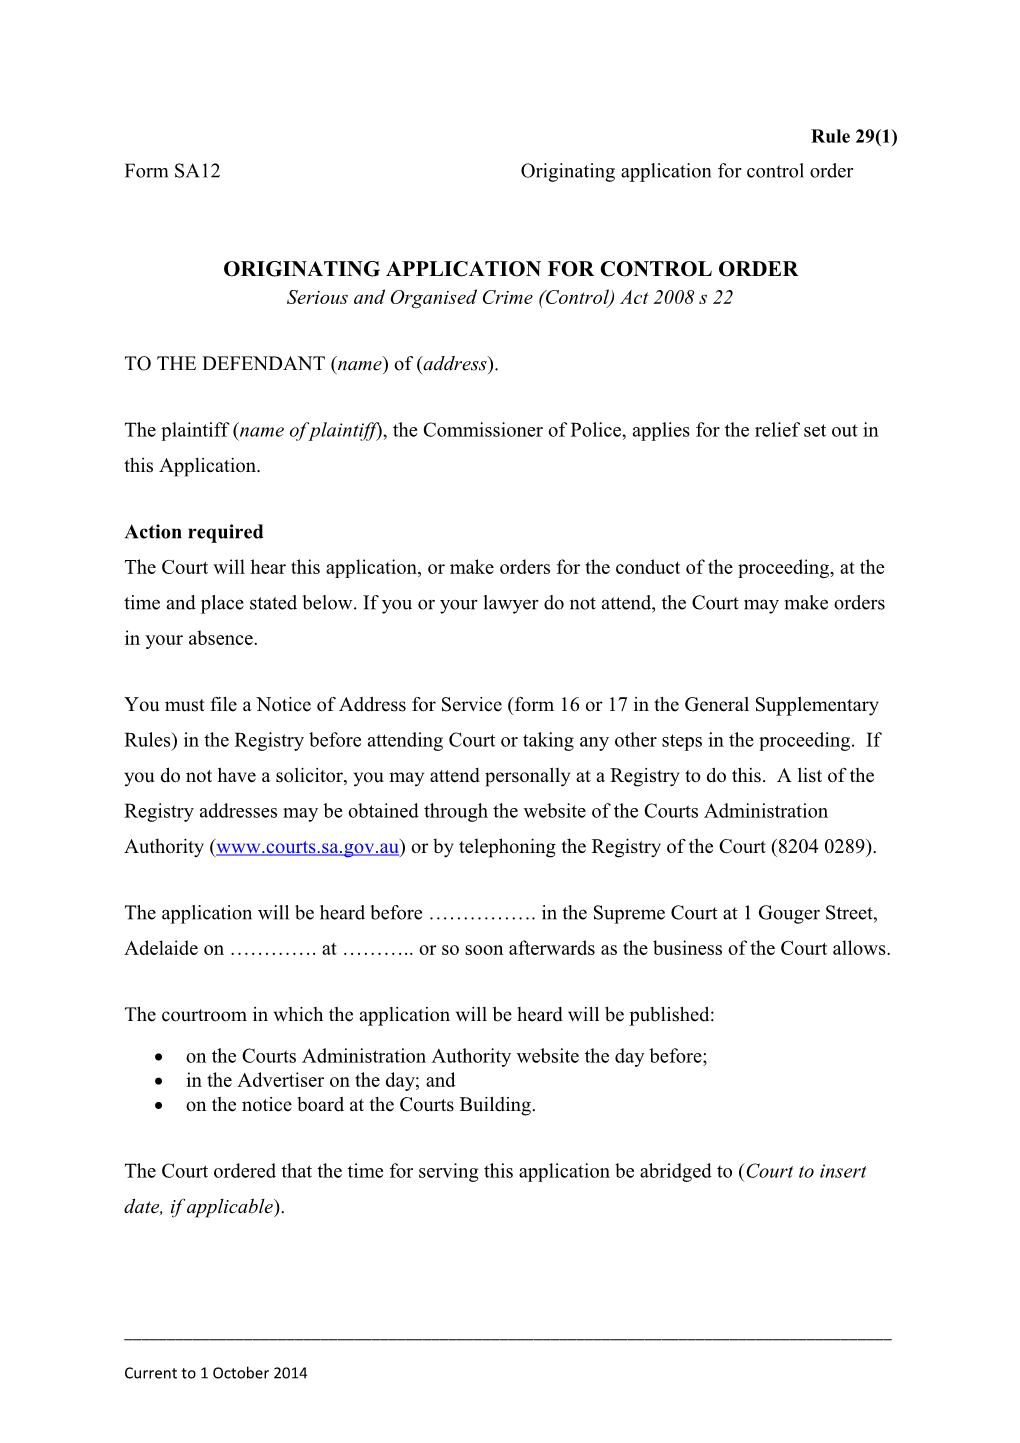 Form SA12 - Originating Application for Control Order